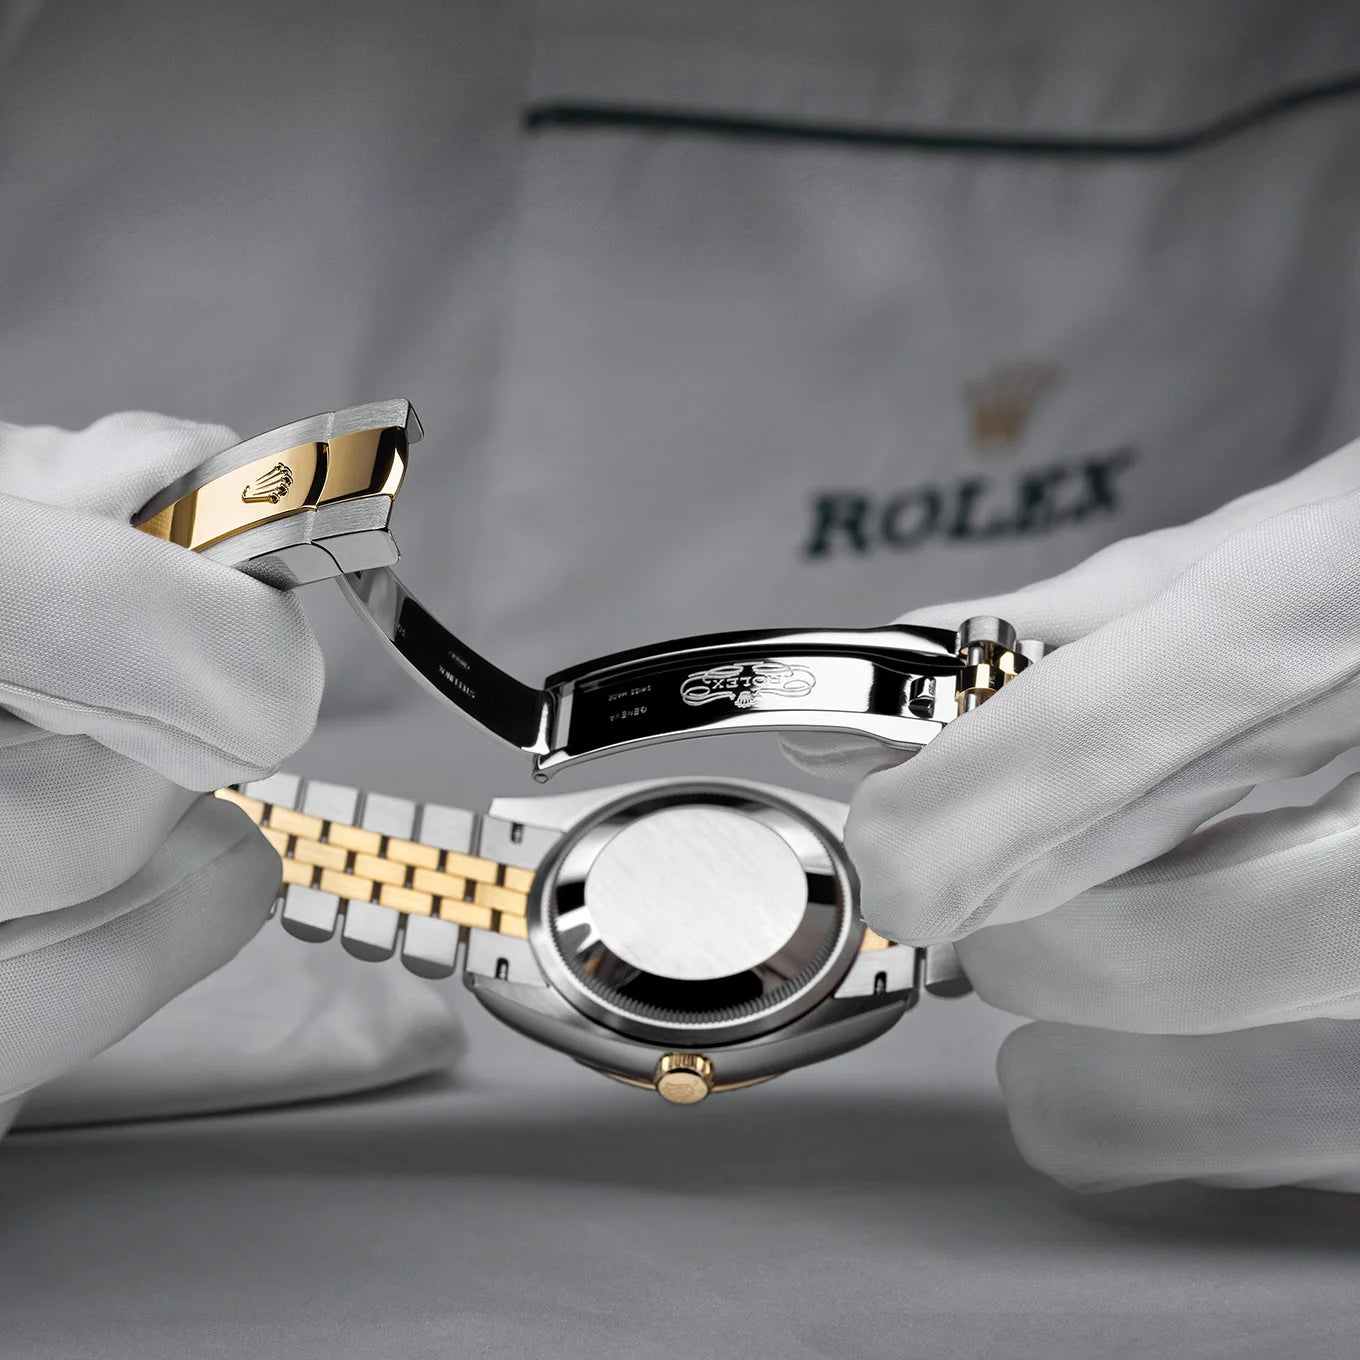 Rolex watches at 